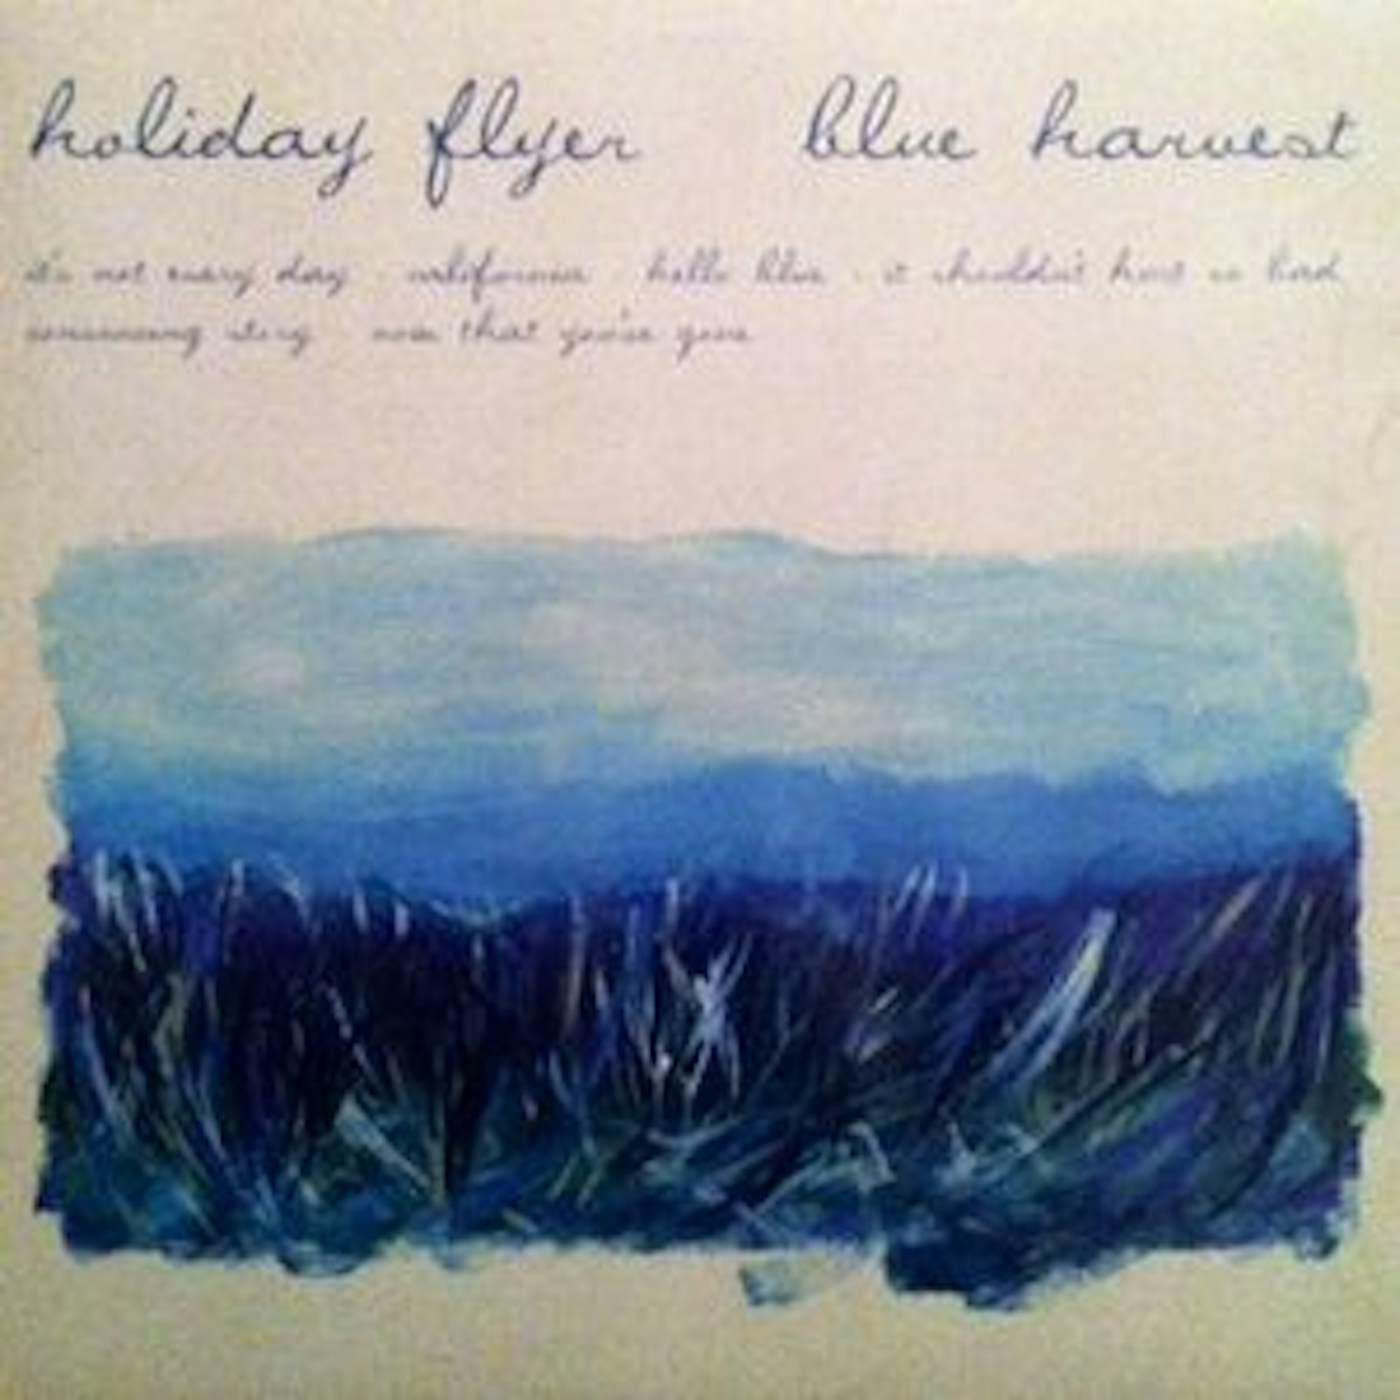 Holiday Flyer Blue Harvest Vinyl Record